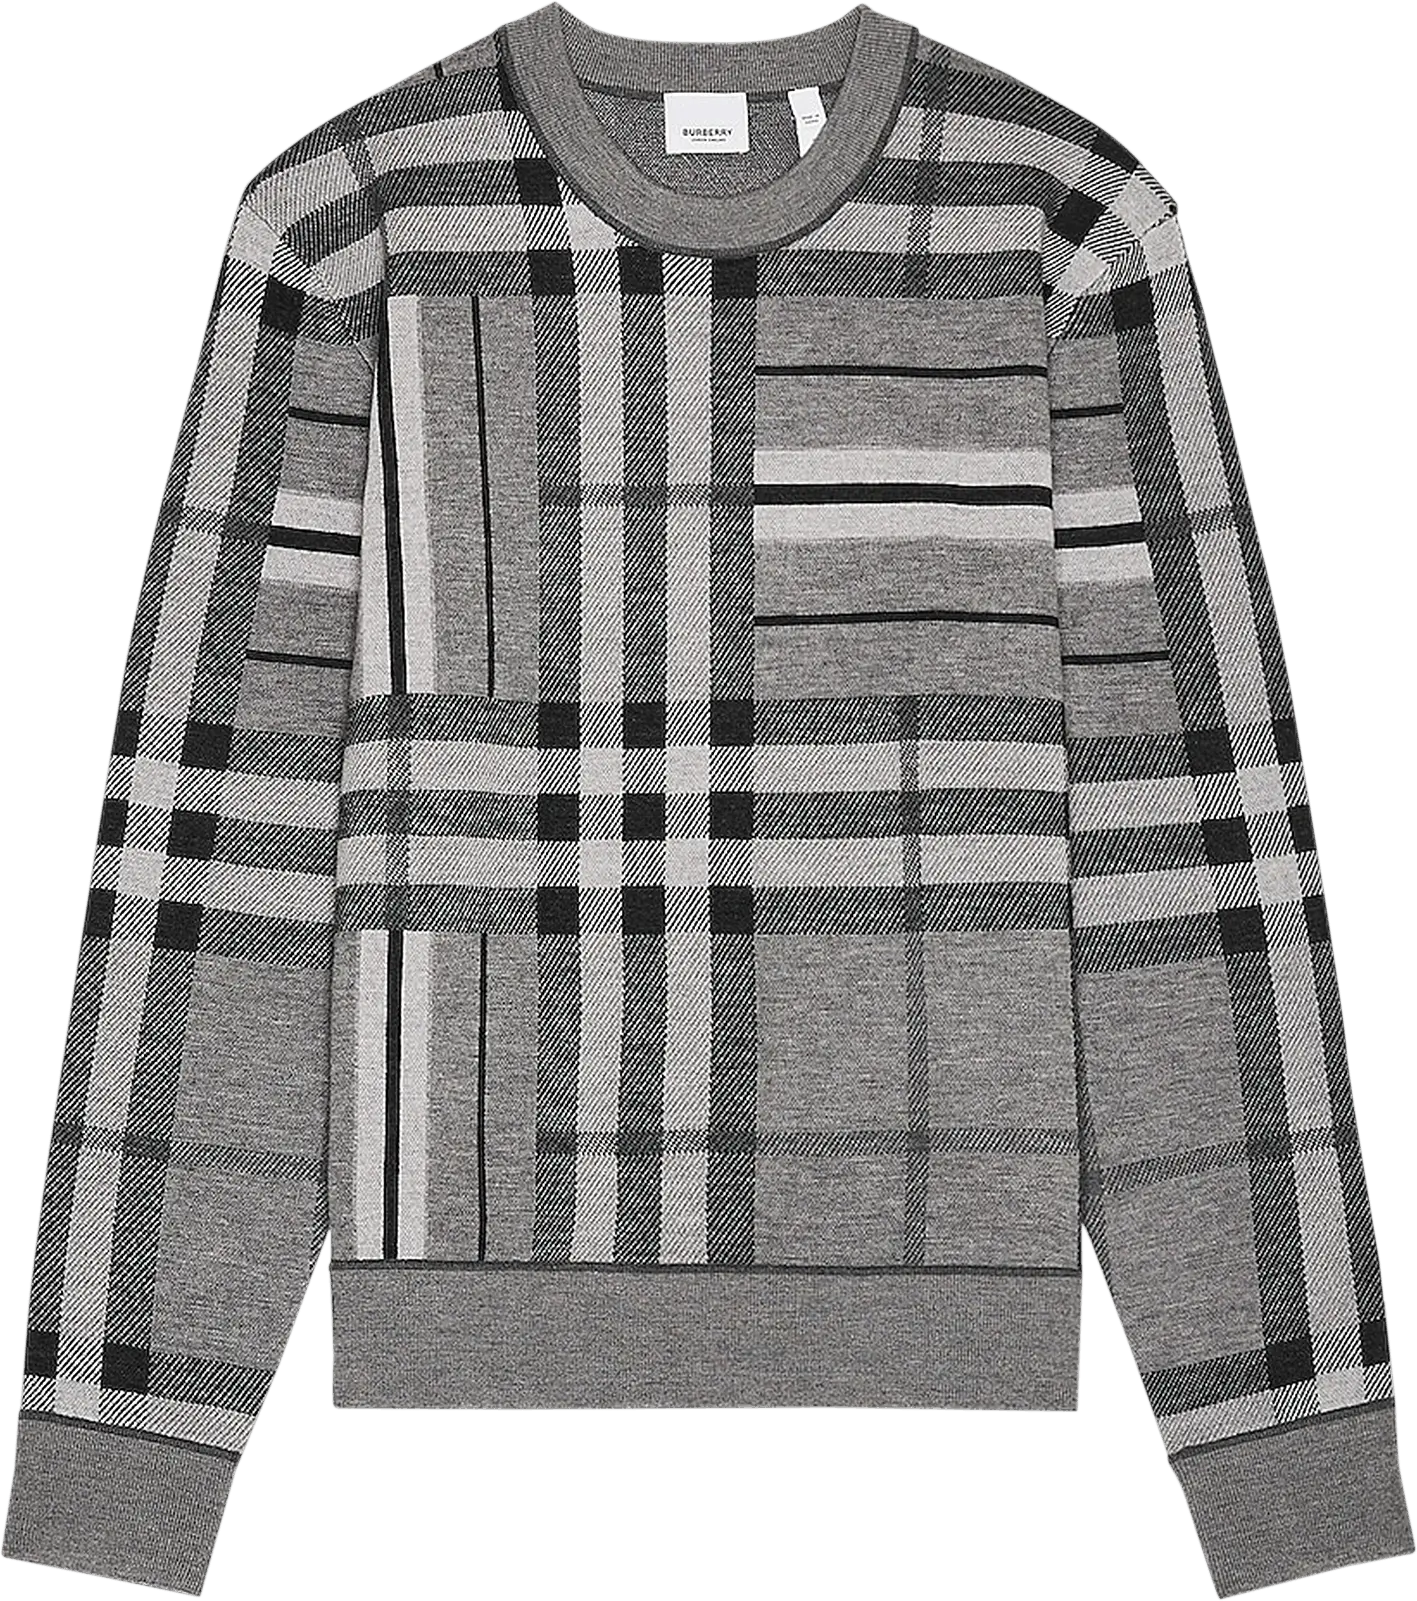  Burberry Check And Stripe Wool Jacquard Sweater &#039;Flint Melange&#039;